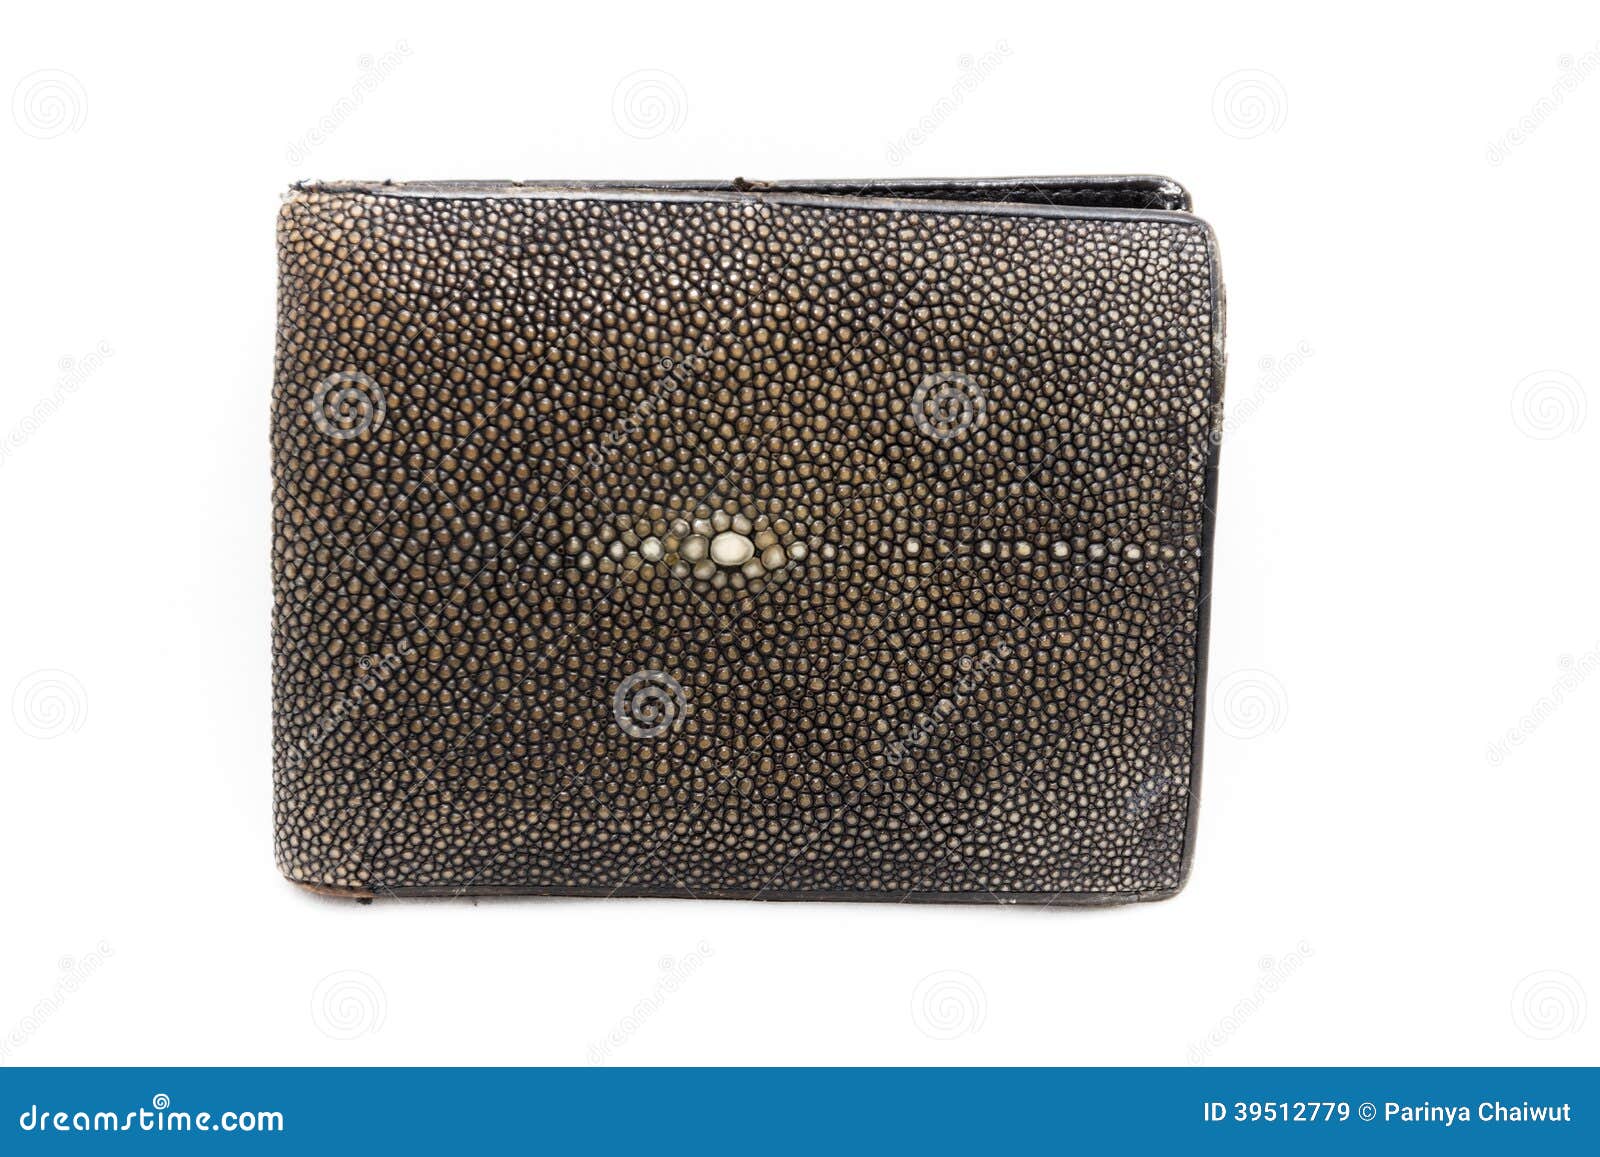 stingray leather wallet isolated white background 39512779